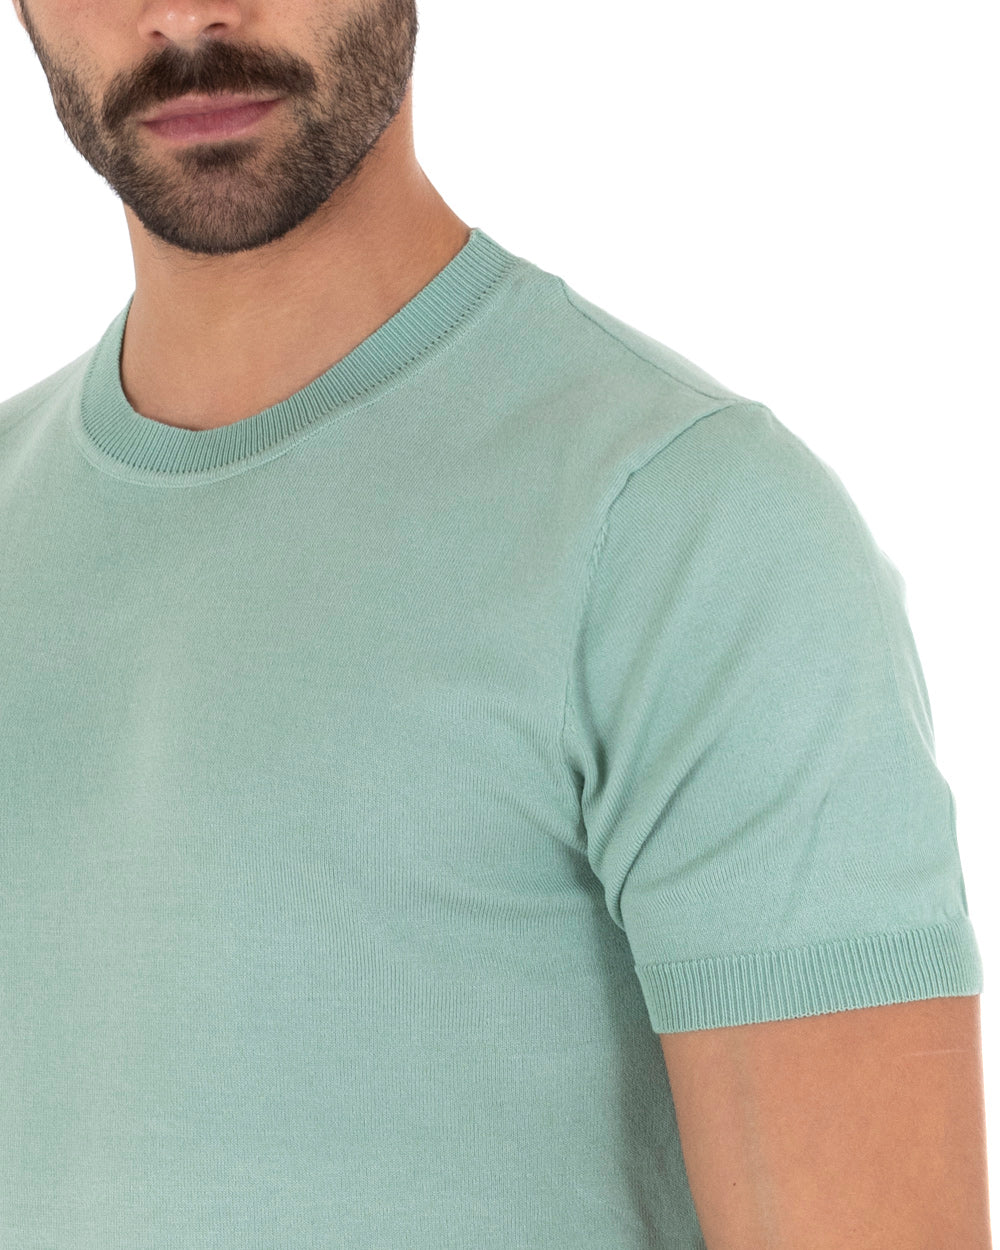 T-Shirt Uomo Maniche Corte Tinta Unita Verde Salvia Girocollo Filo Casual GIOSAL-TS3050A